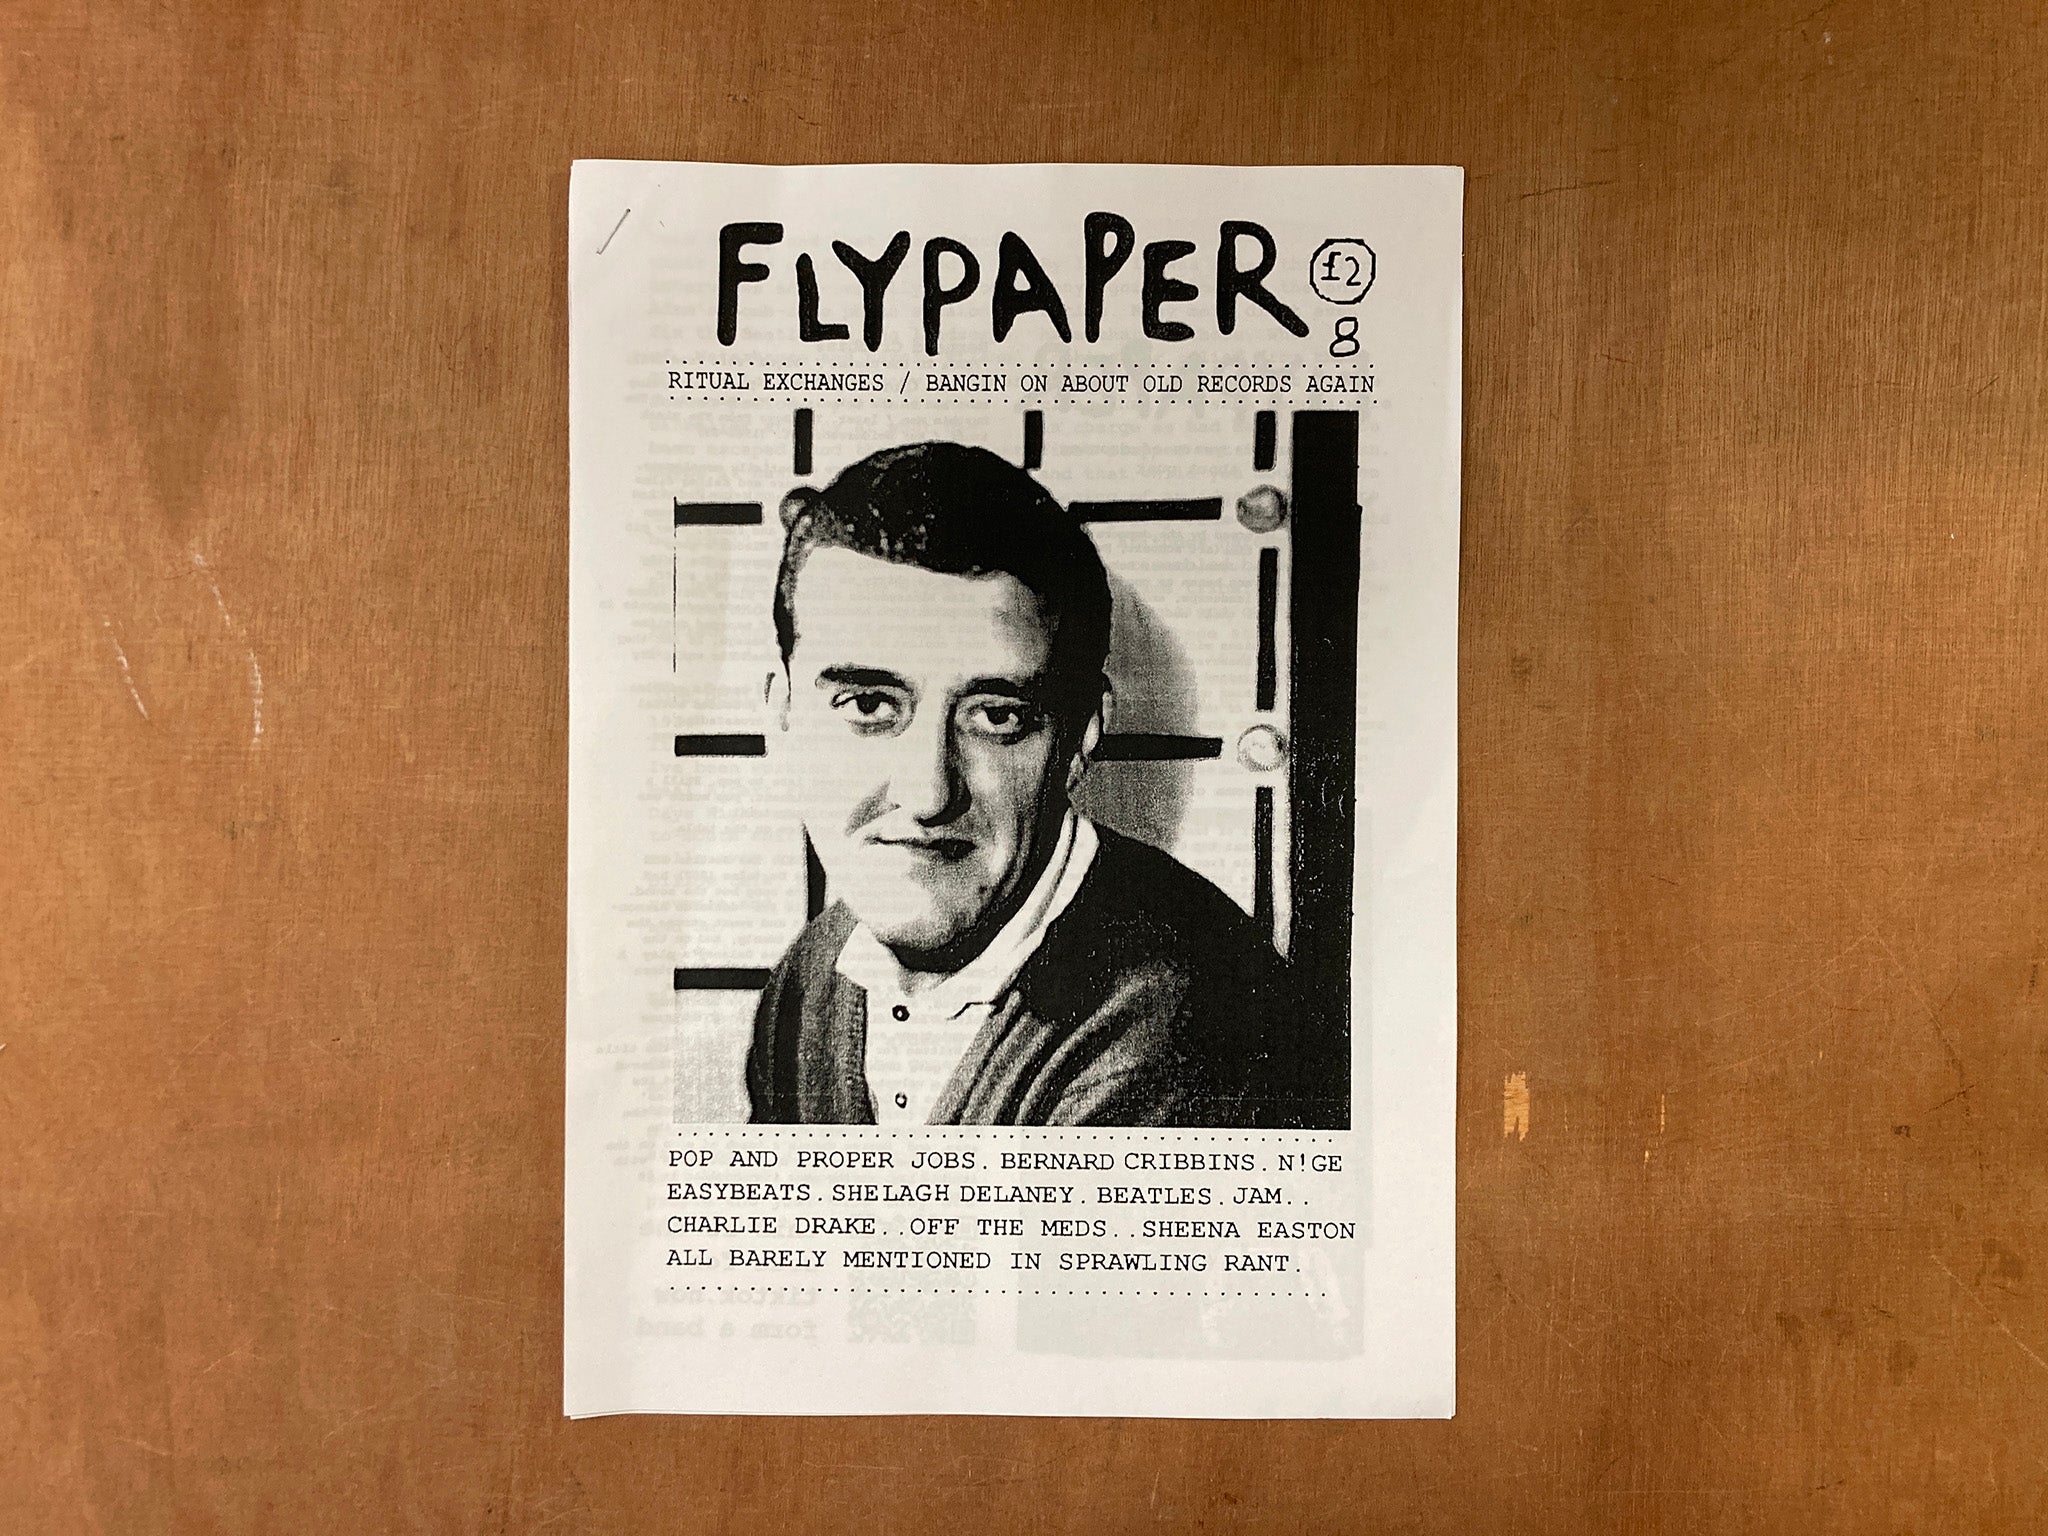 FLYPAPER 8 by John Hall